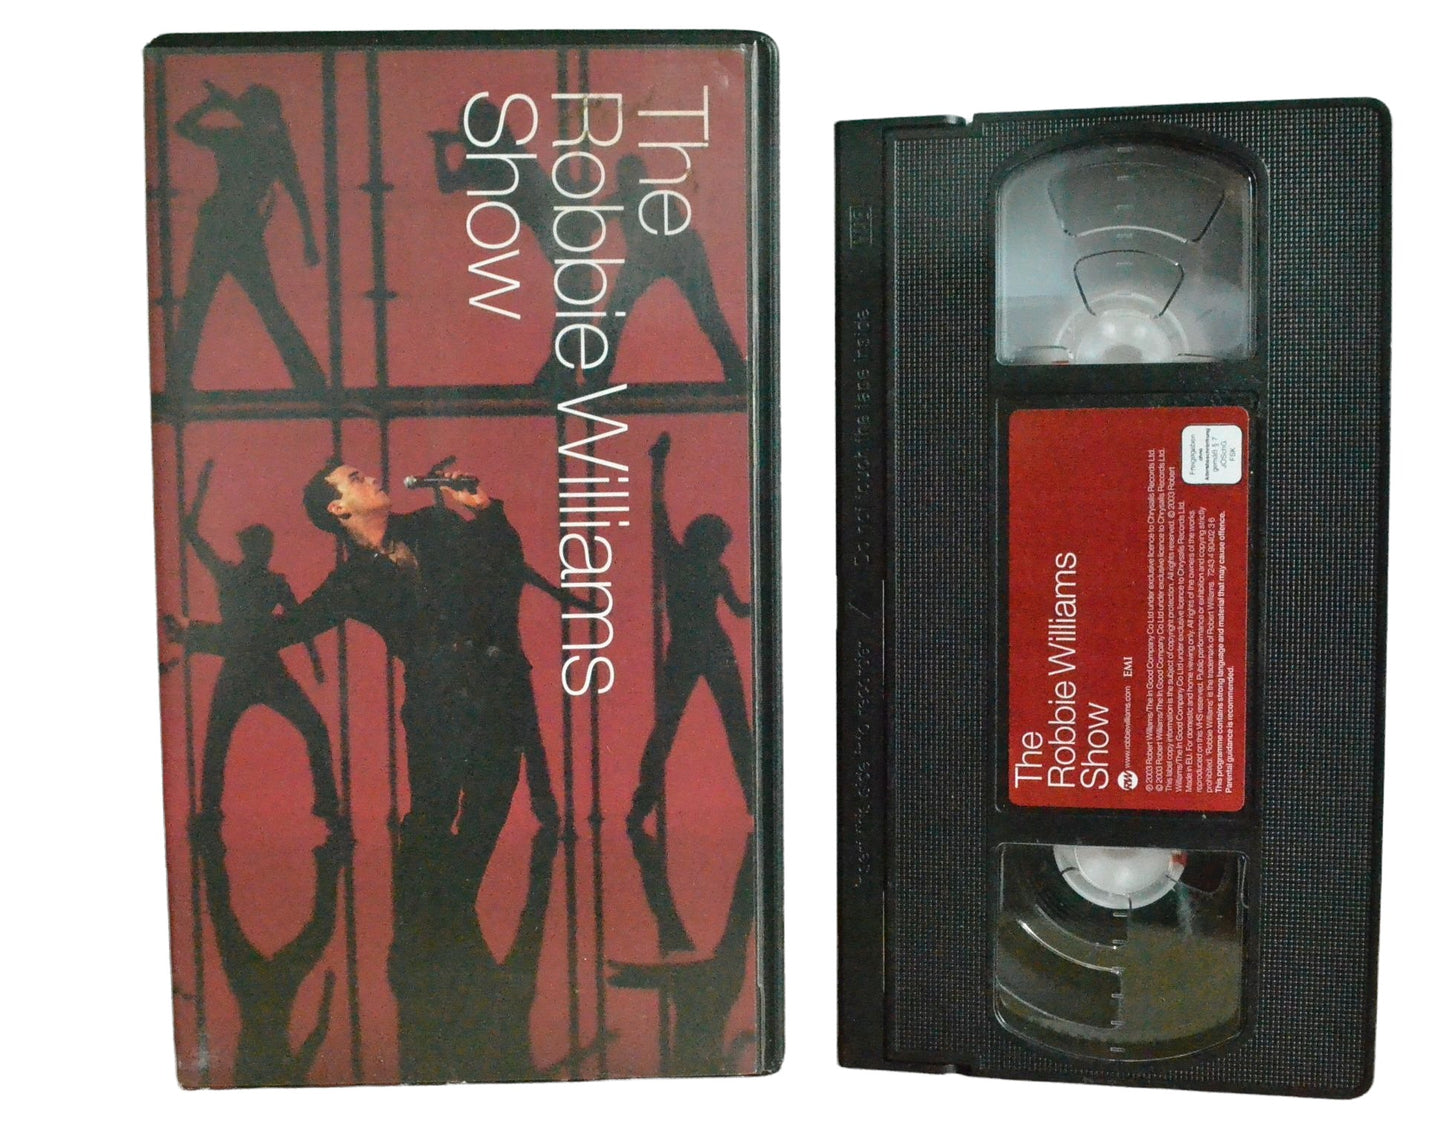 The Robbie Williams Show - Robbie Williams - Music - Pal VHS-